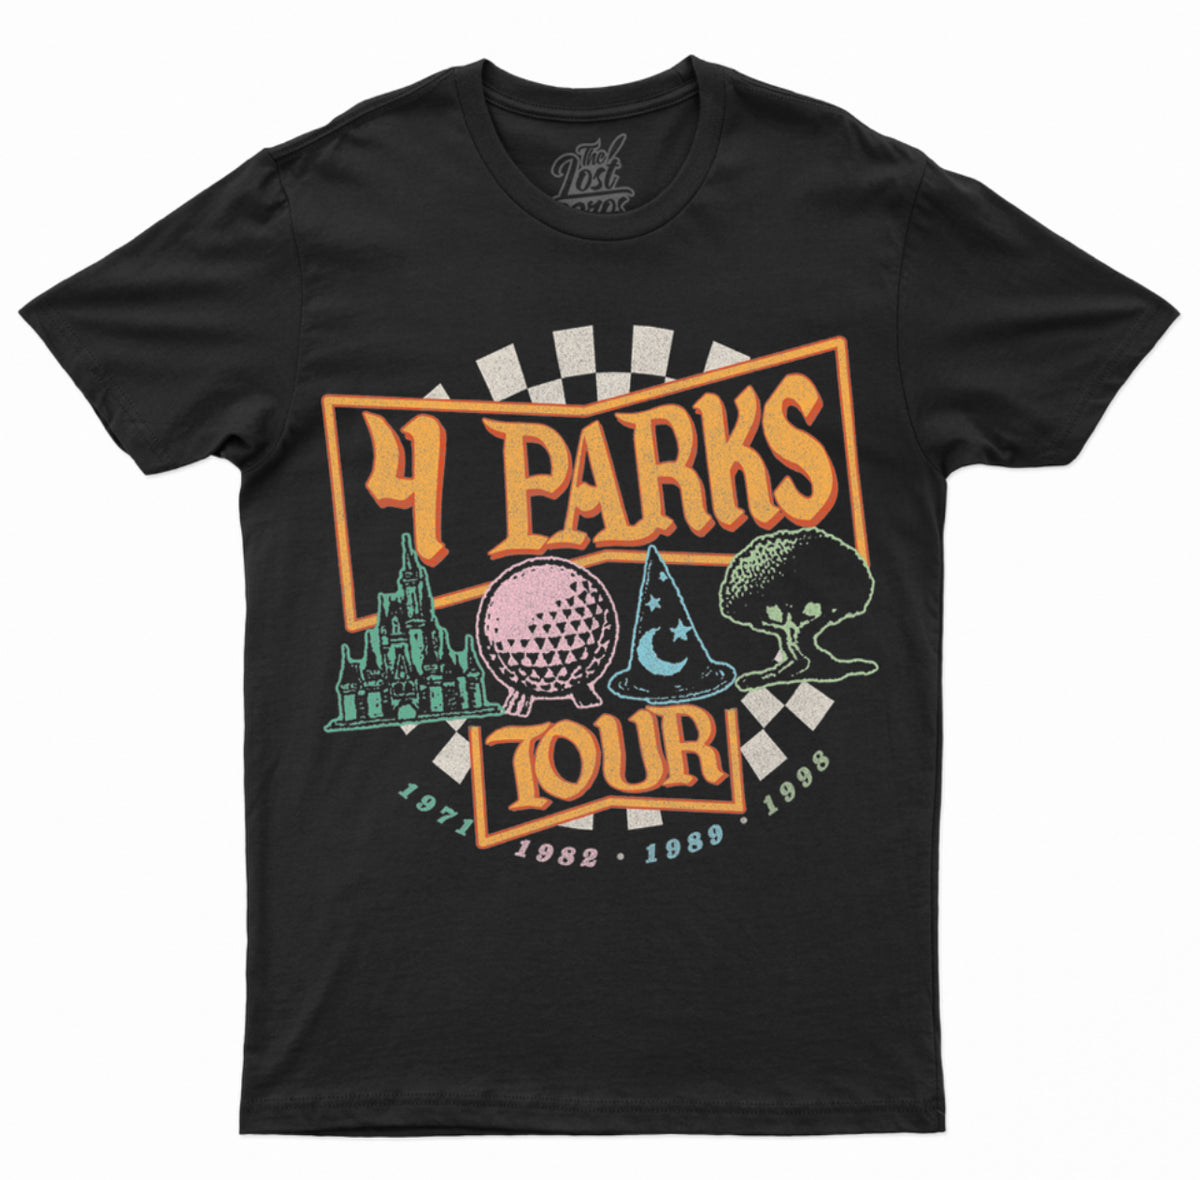 4 Parks Tour Tee - Black